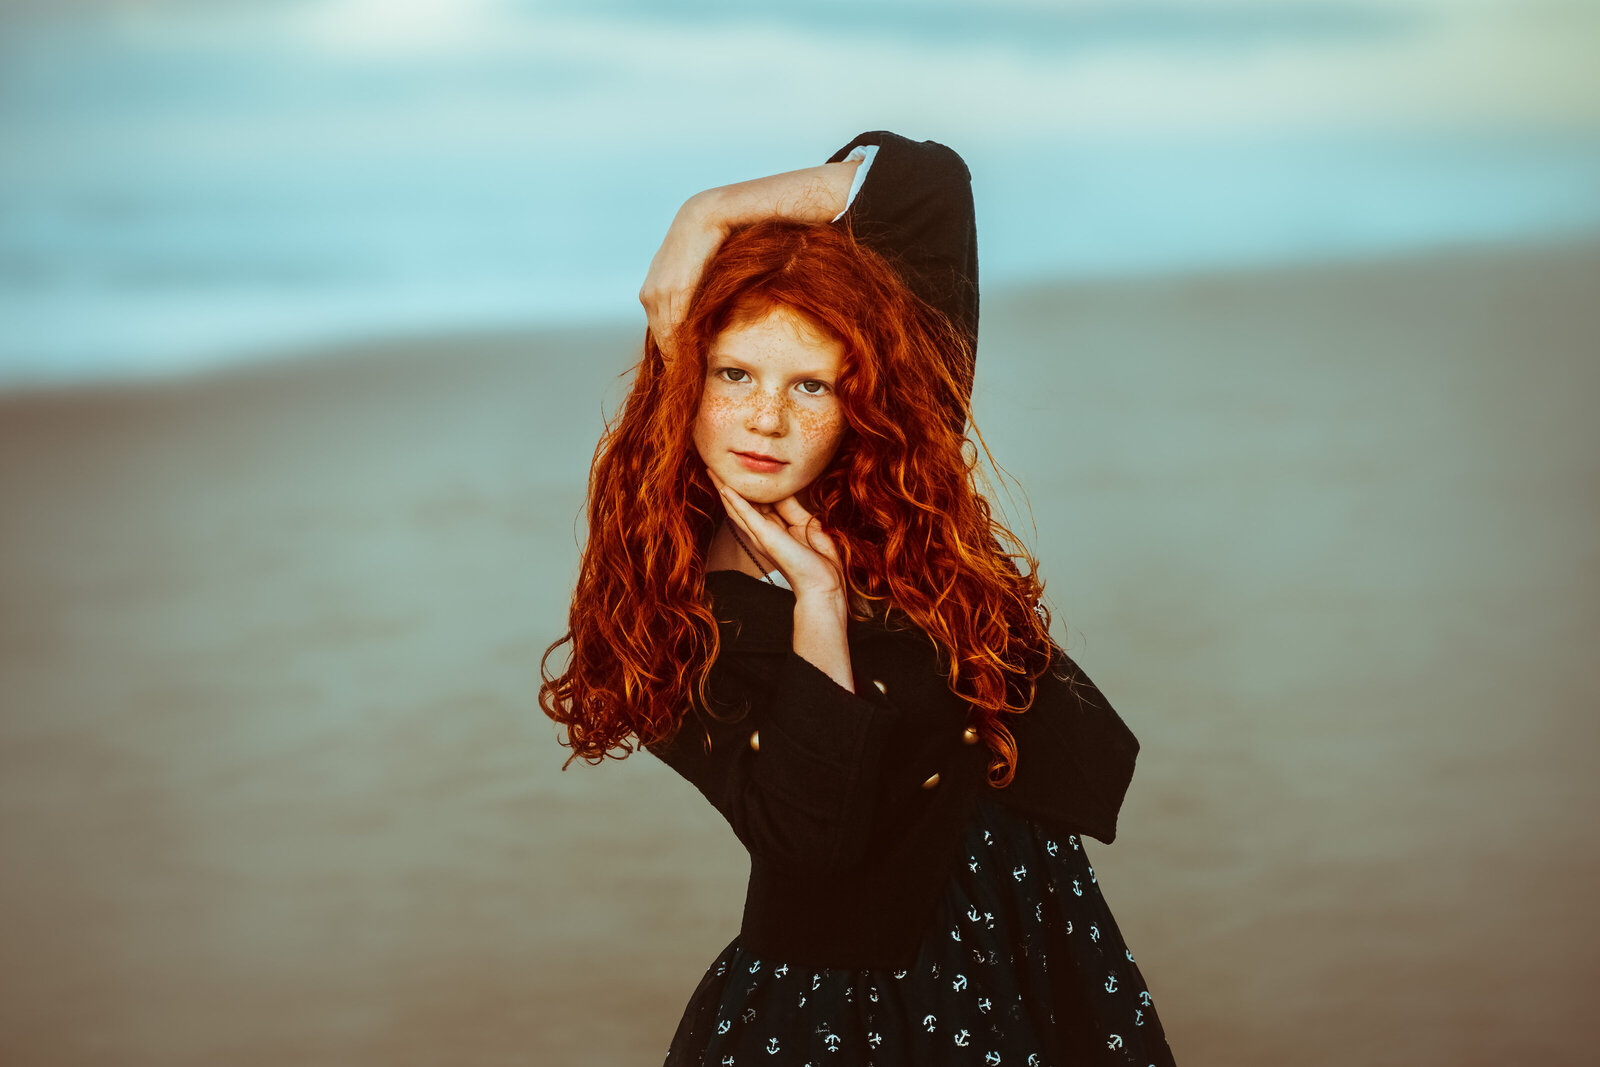 Mount-photographer-fineart-beach-child-redhead-17-2